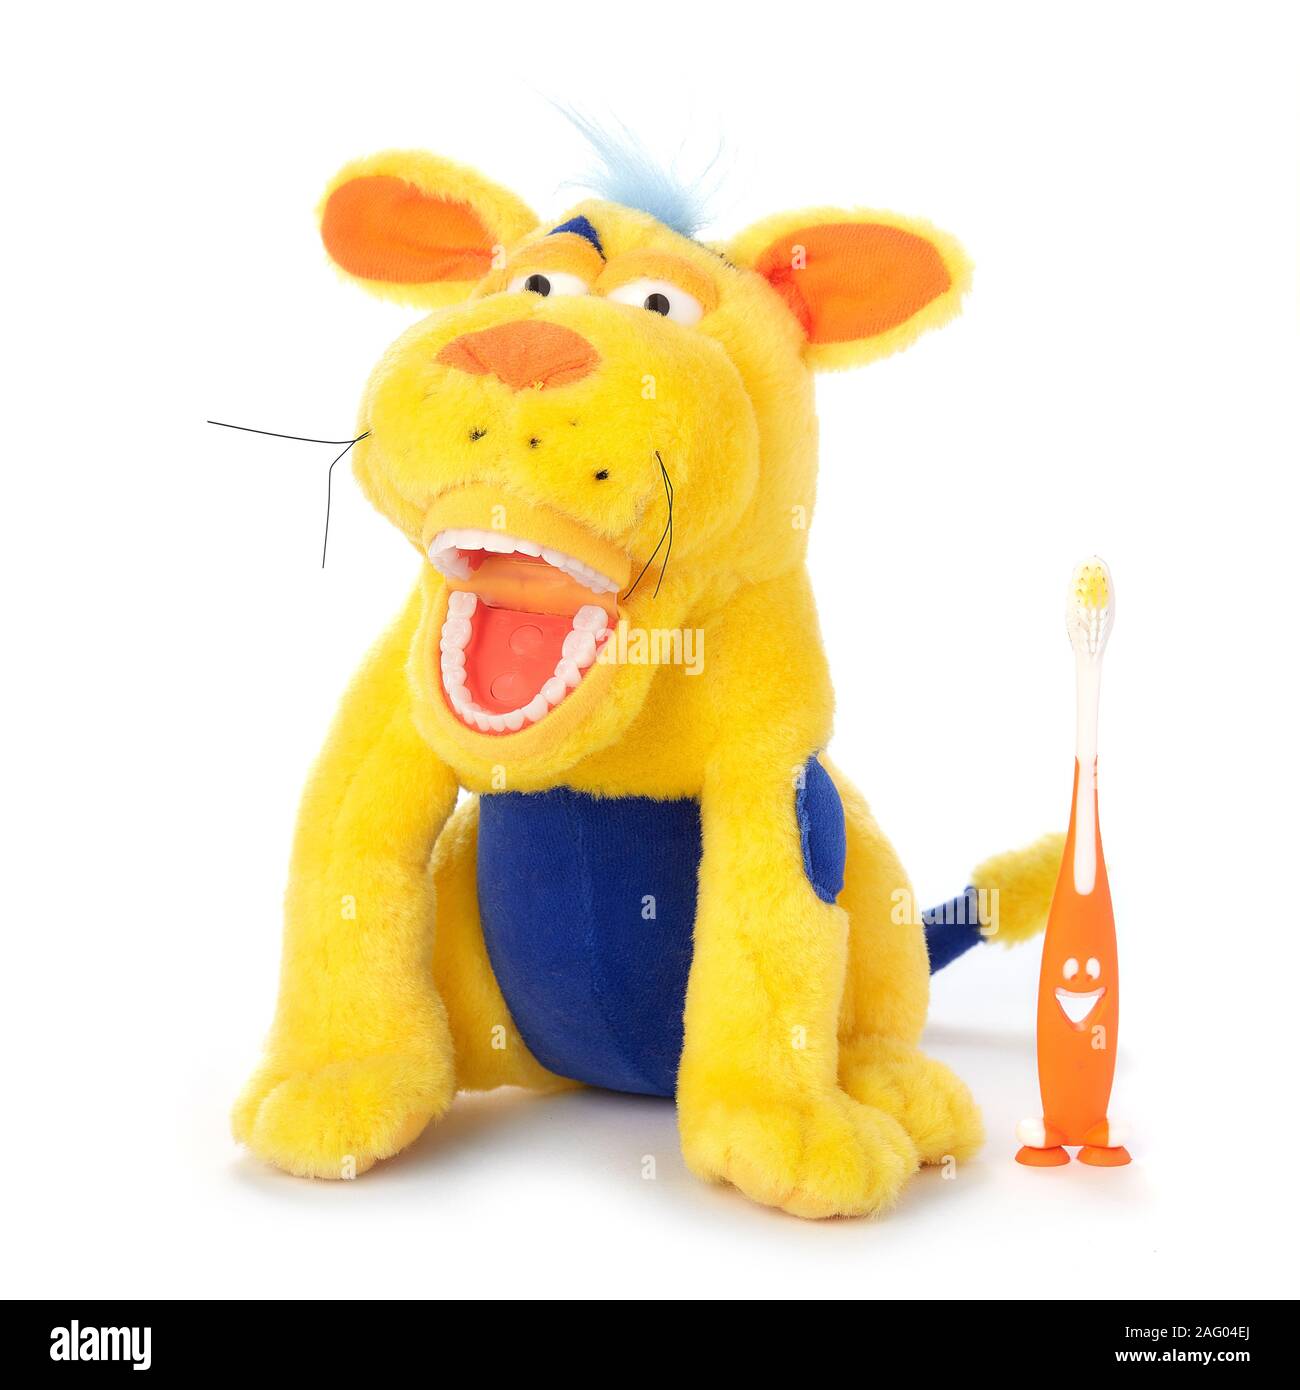 Dental hygeine plush teaching toy Stock Photo